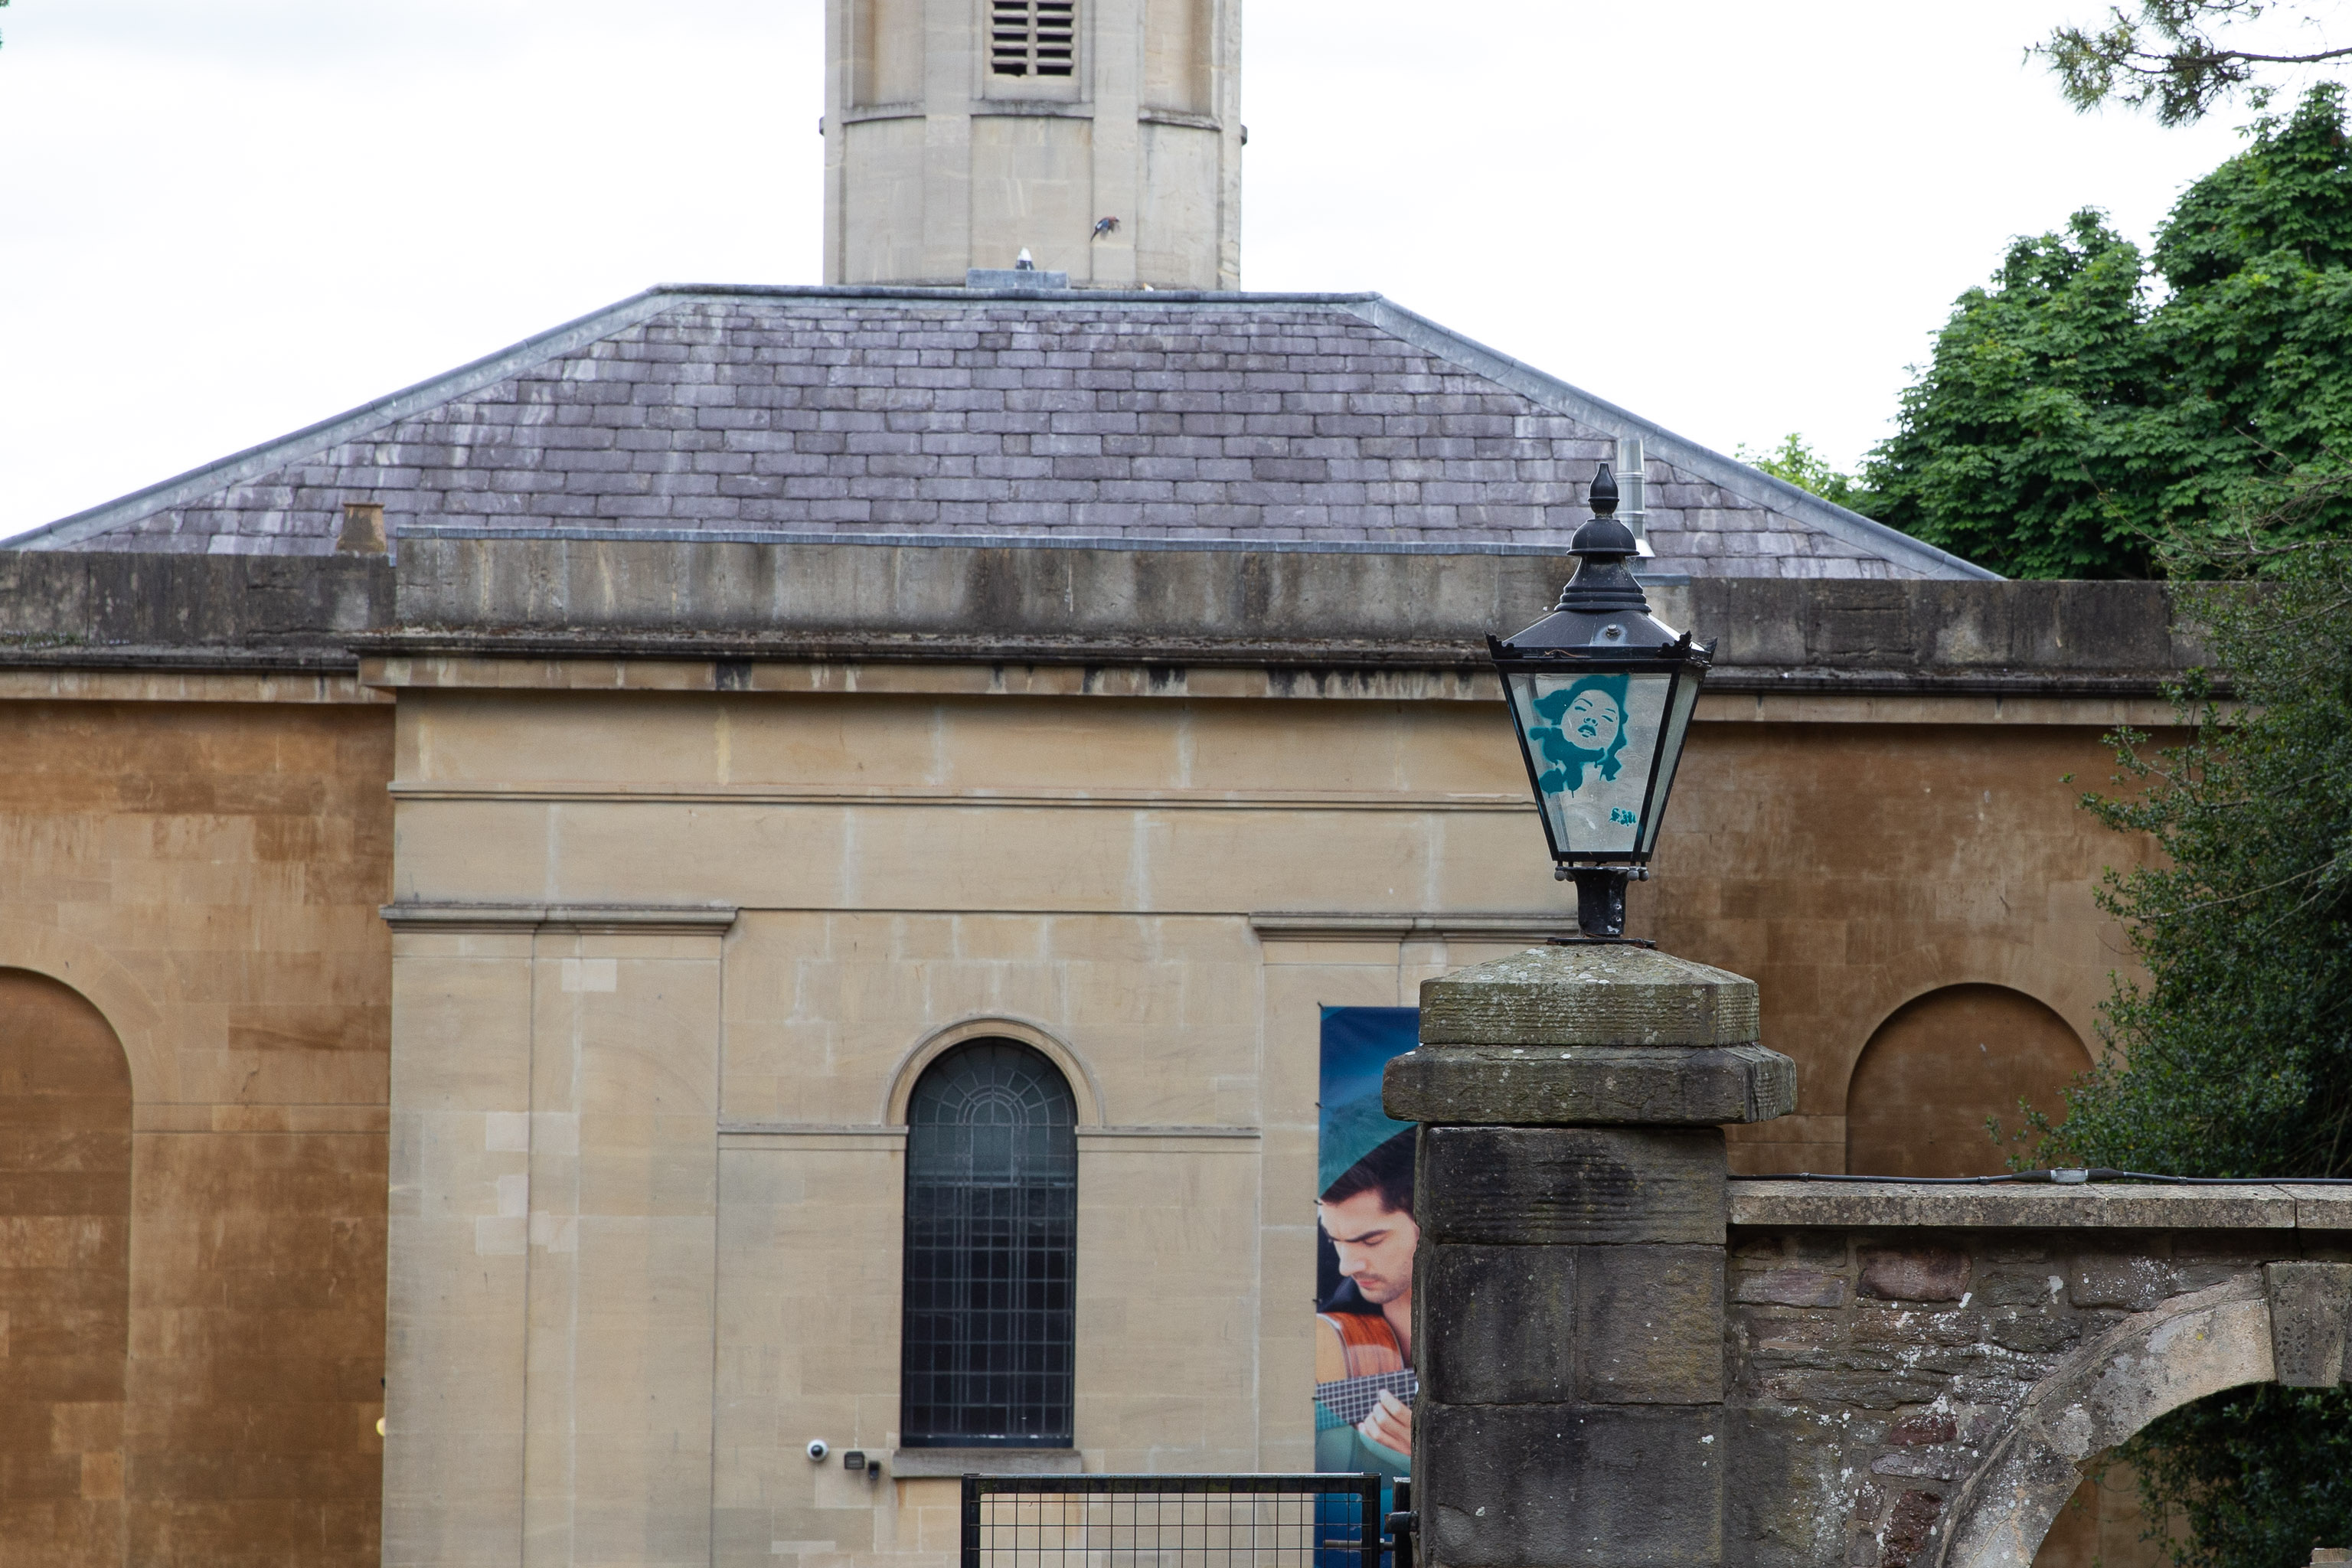 St George's Back
With a bit of lantern graffiti.
